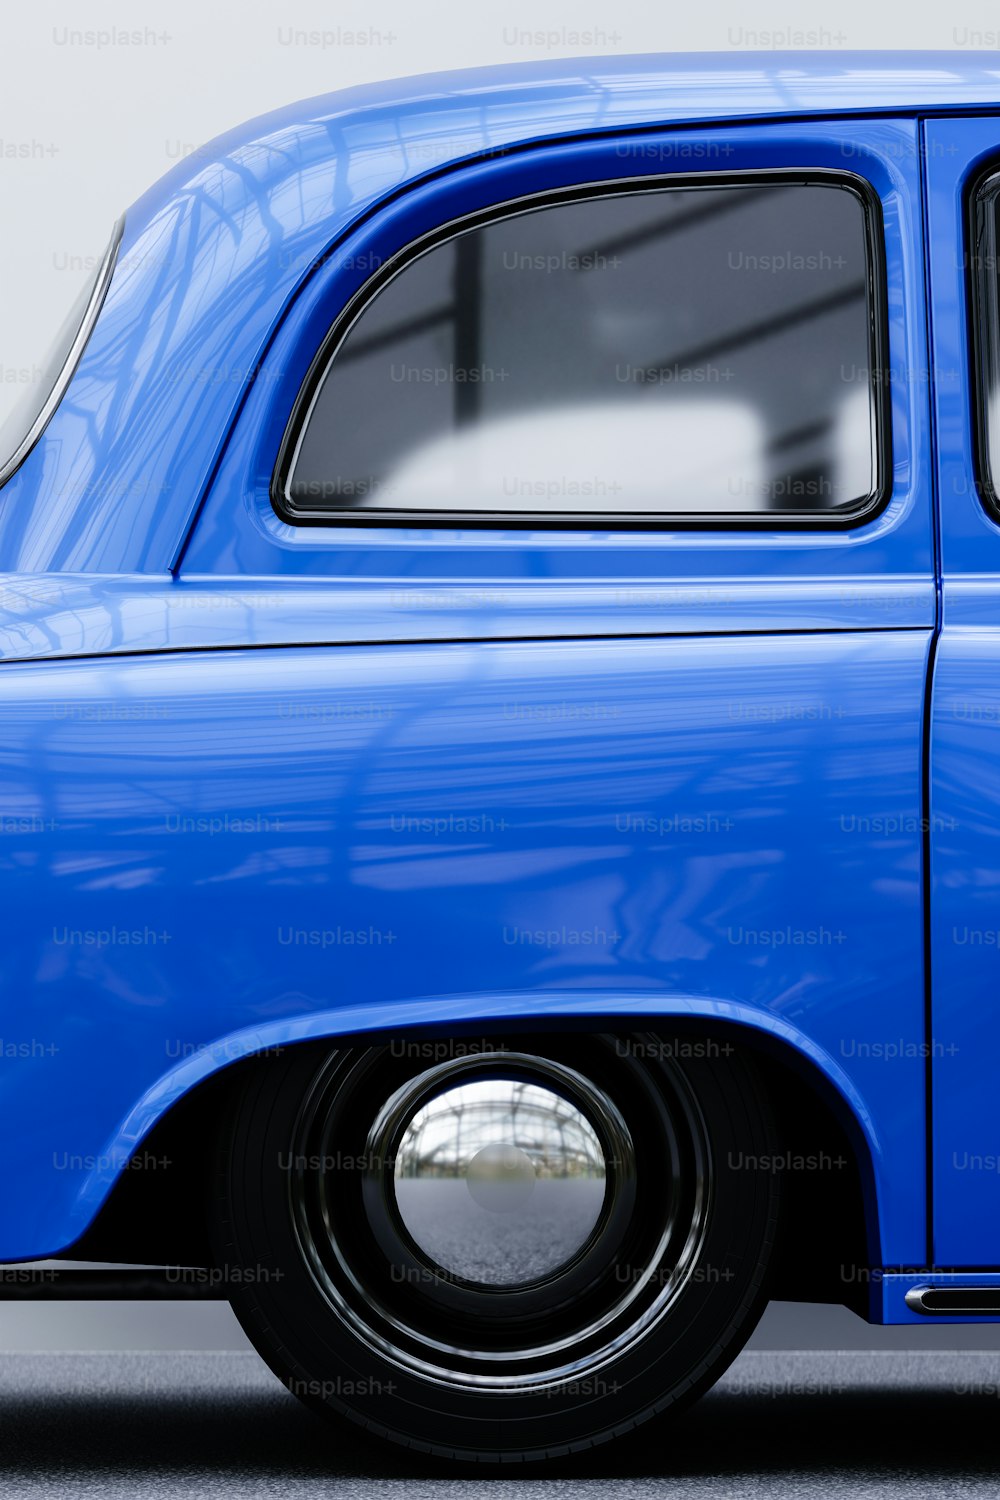 Un primer plano de un coche azul con un fondo blanco